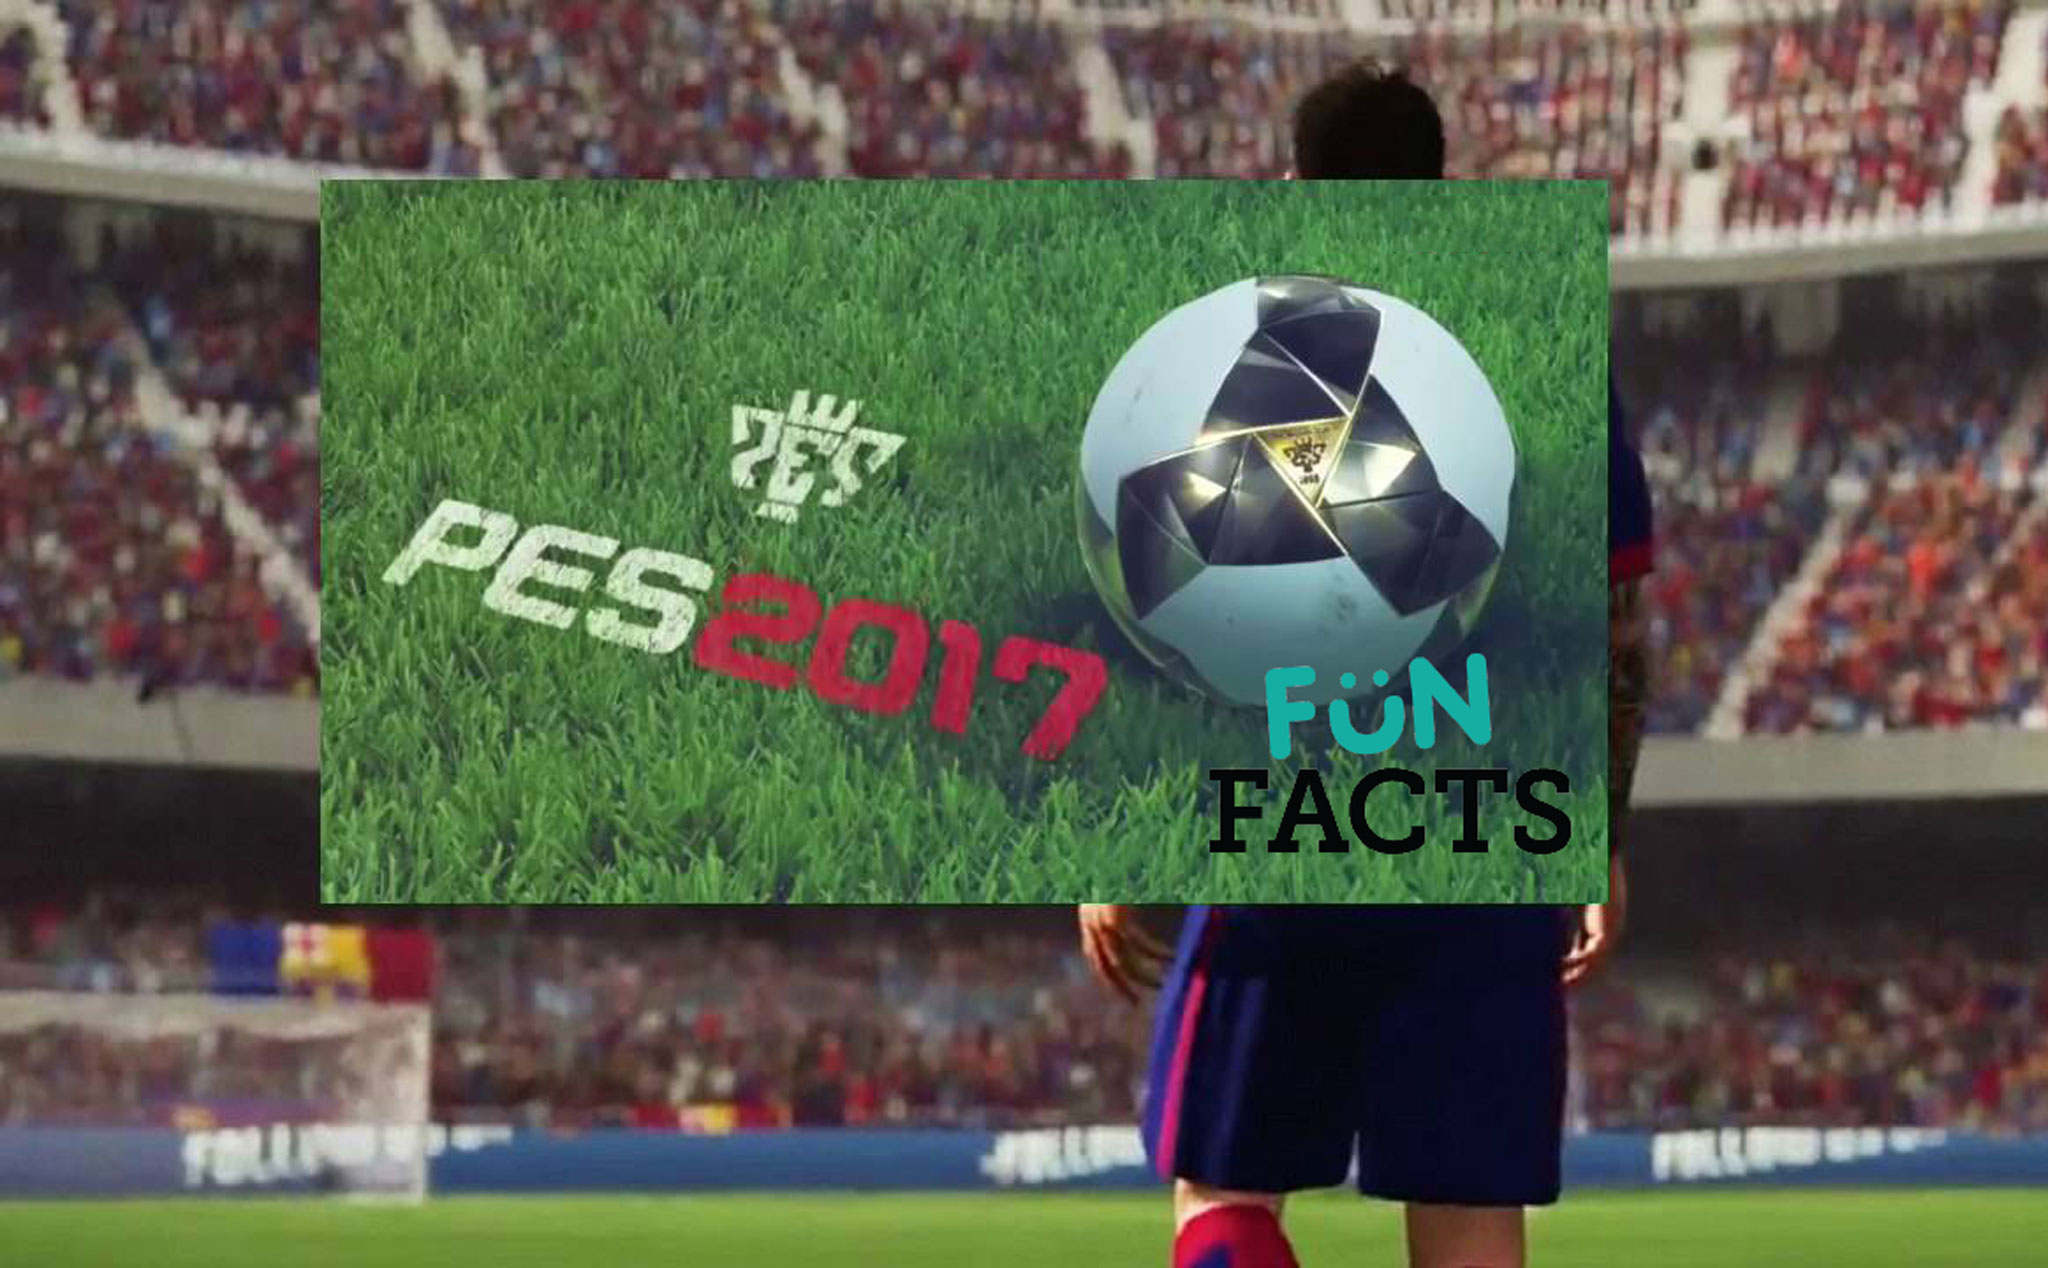 cover_PES 2017 fun facts_tinhte.jpg